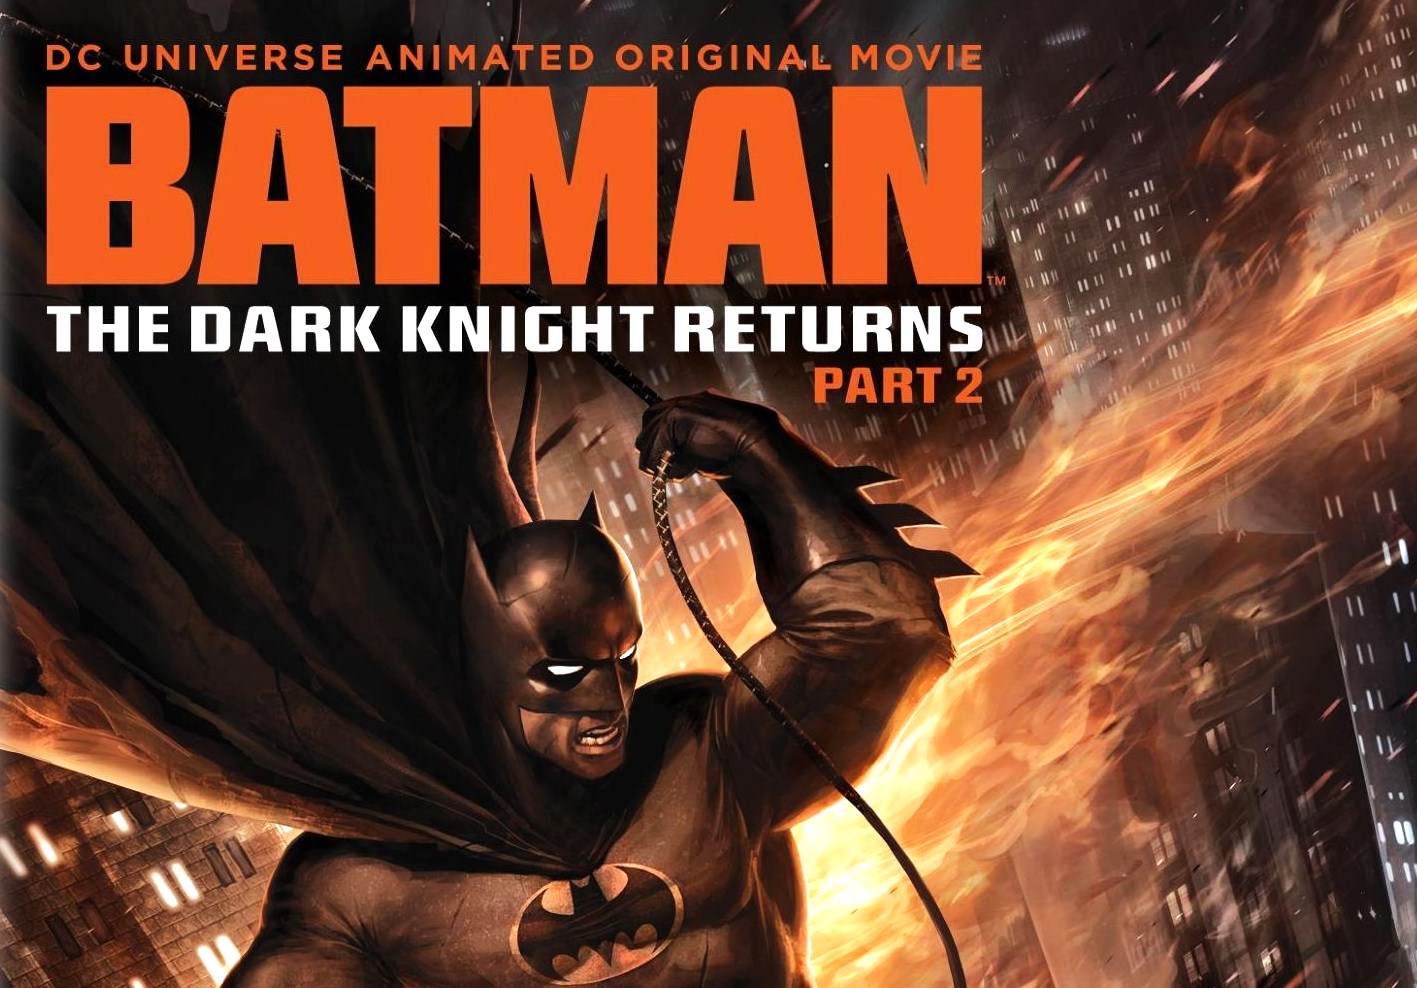 Dante Rants: DVDiculous: Dark Knight Returns Part 2